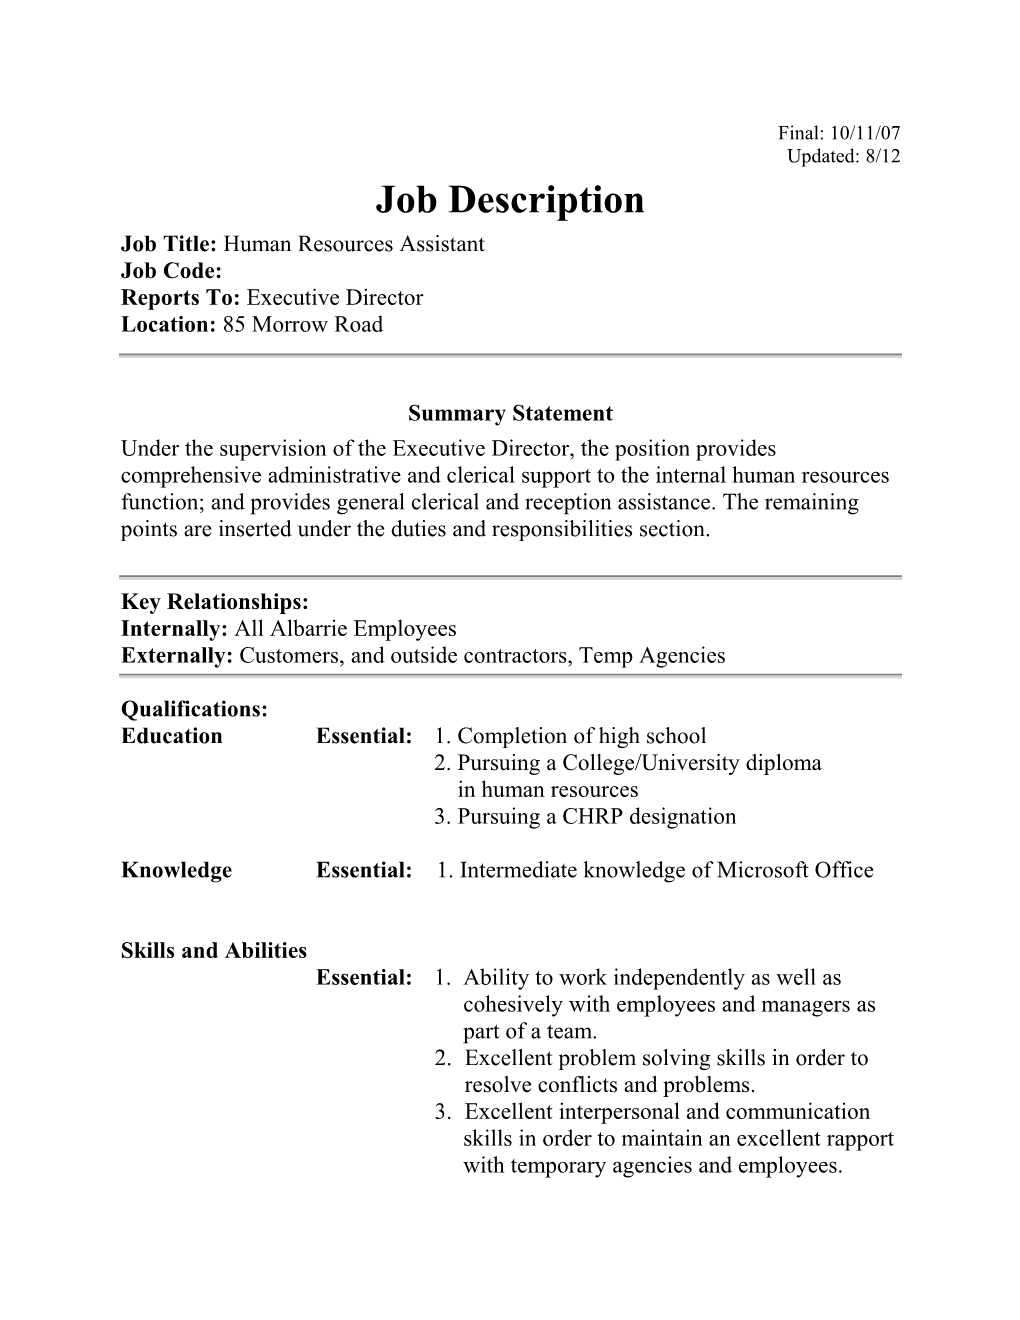 Job Title: Human Resources Assistant